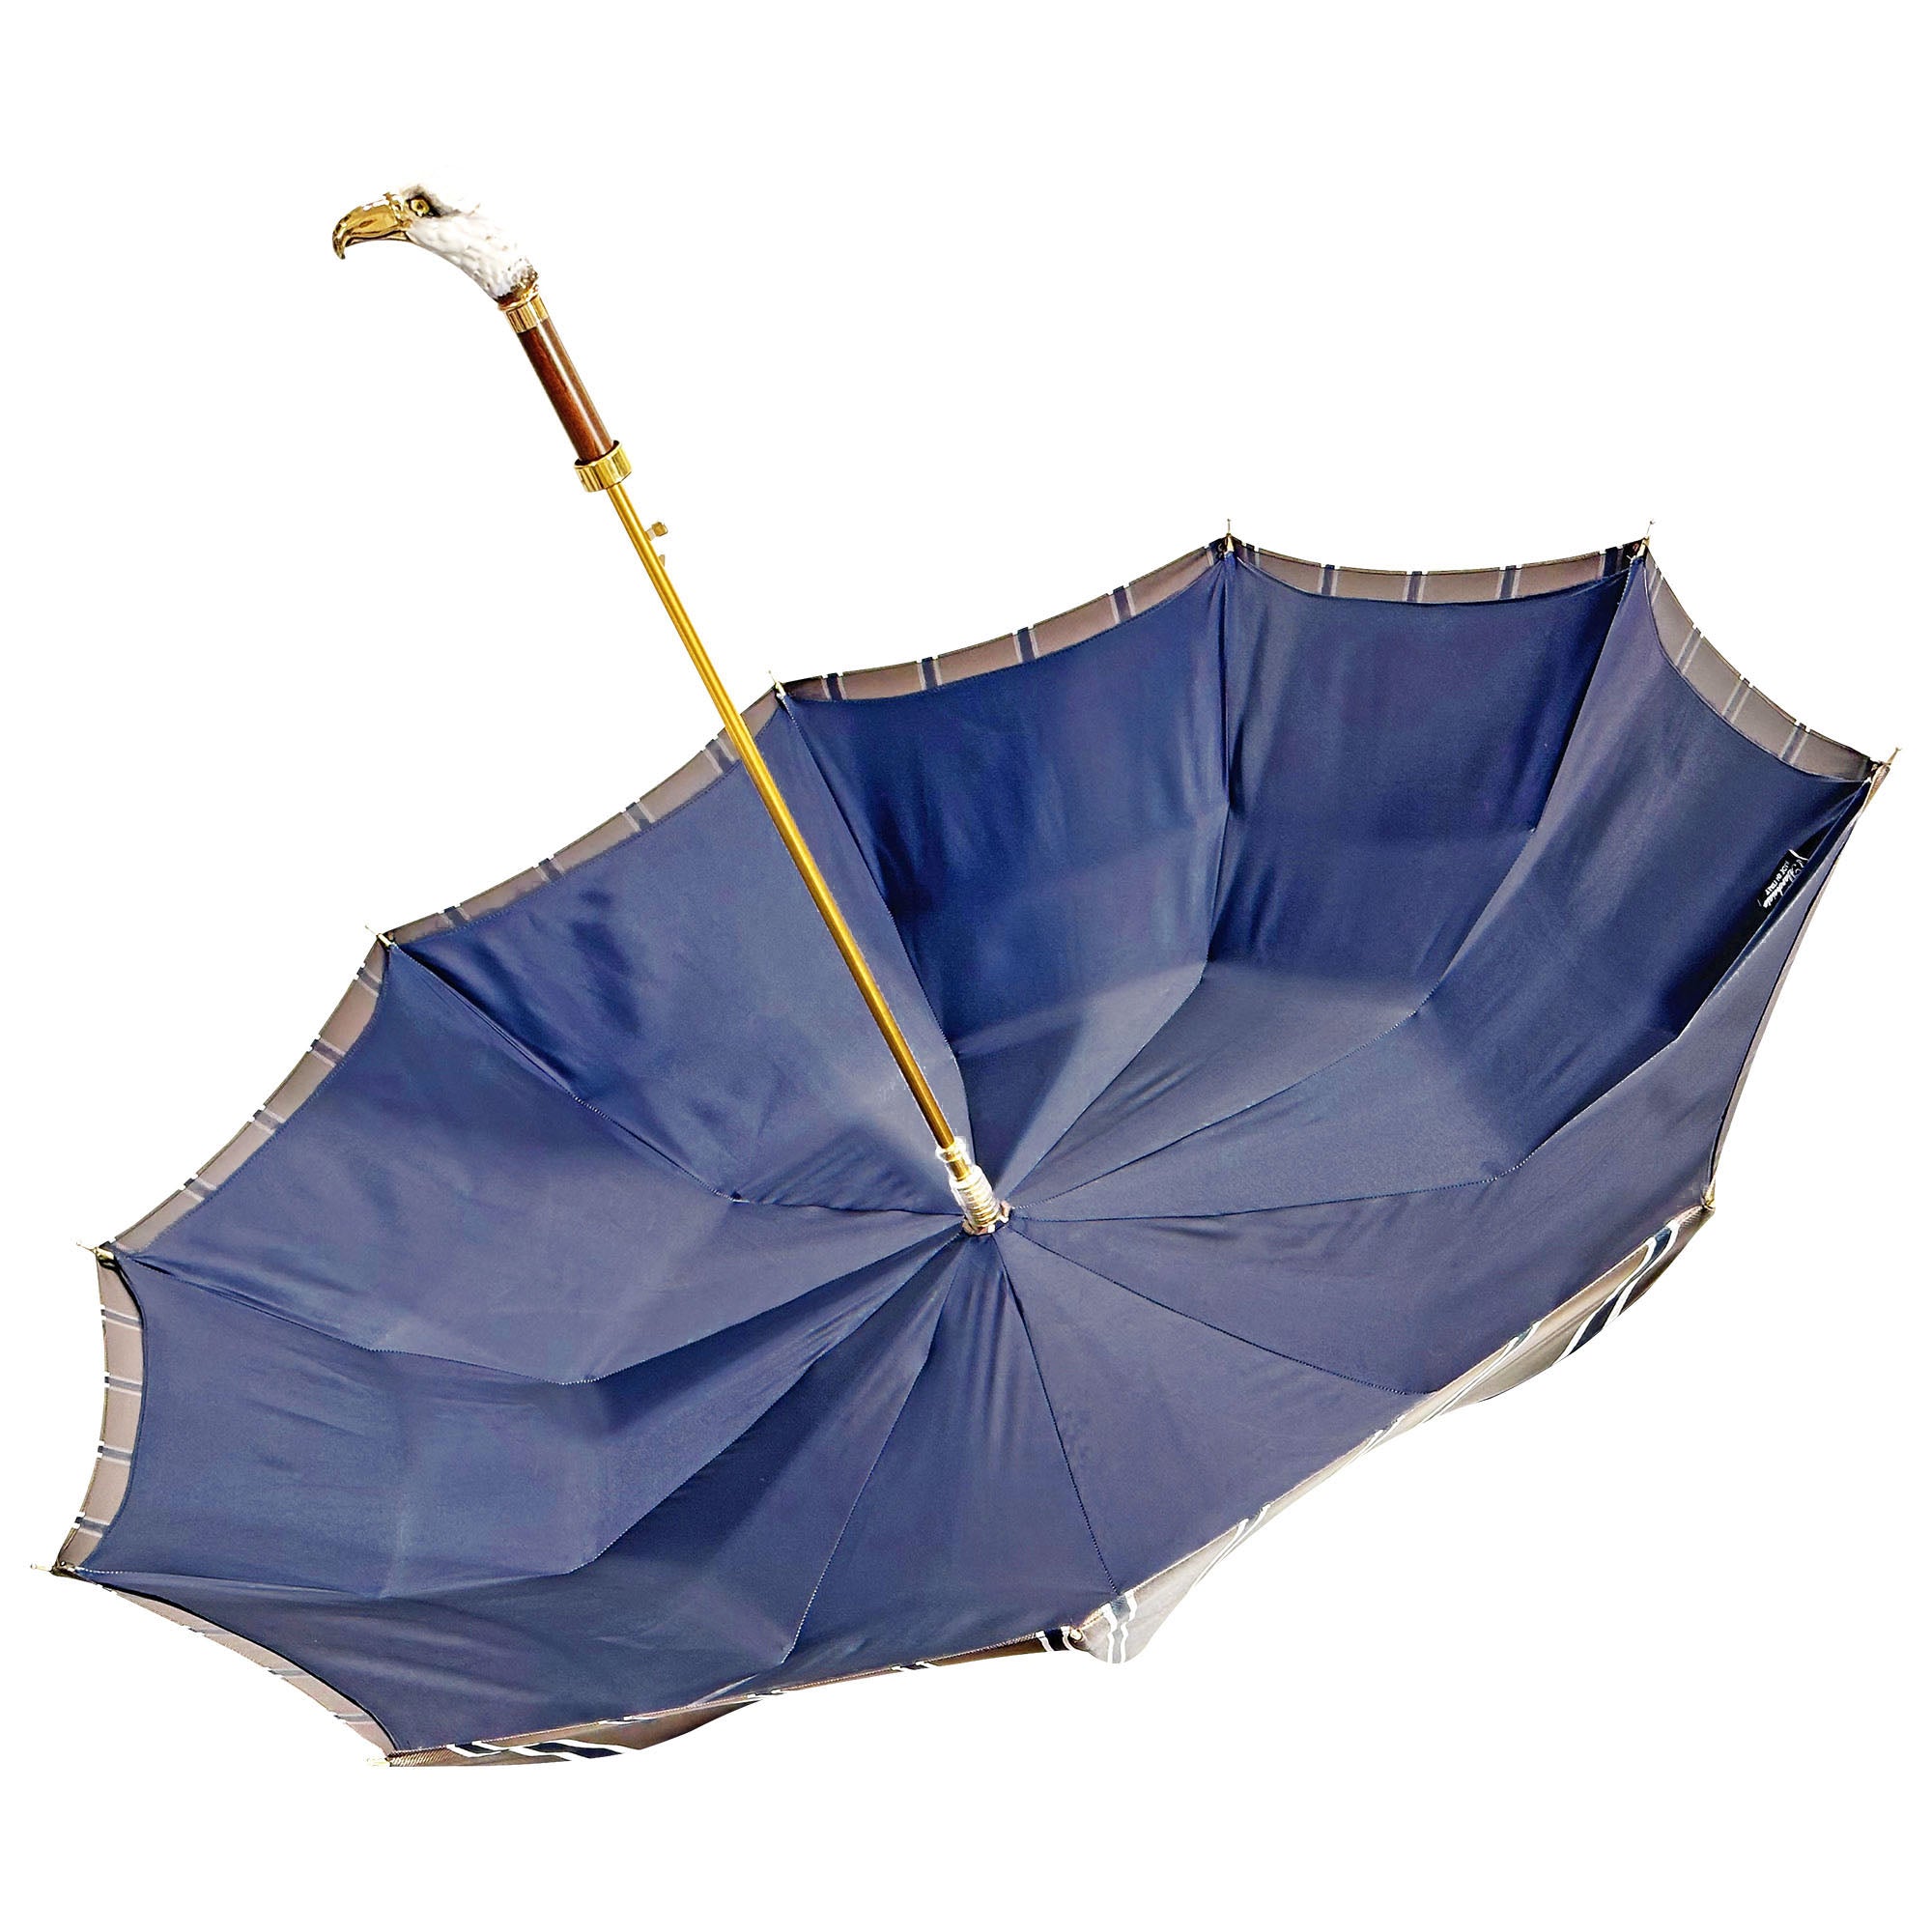 Handmade umbrella with enameled Goldplated 24K Eagle